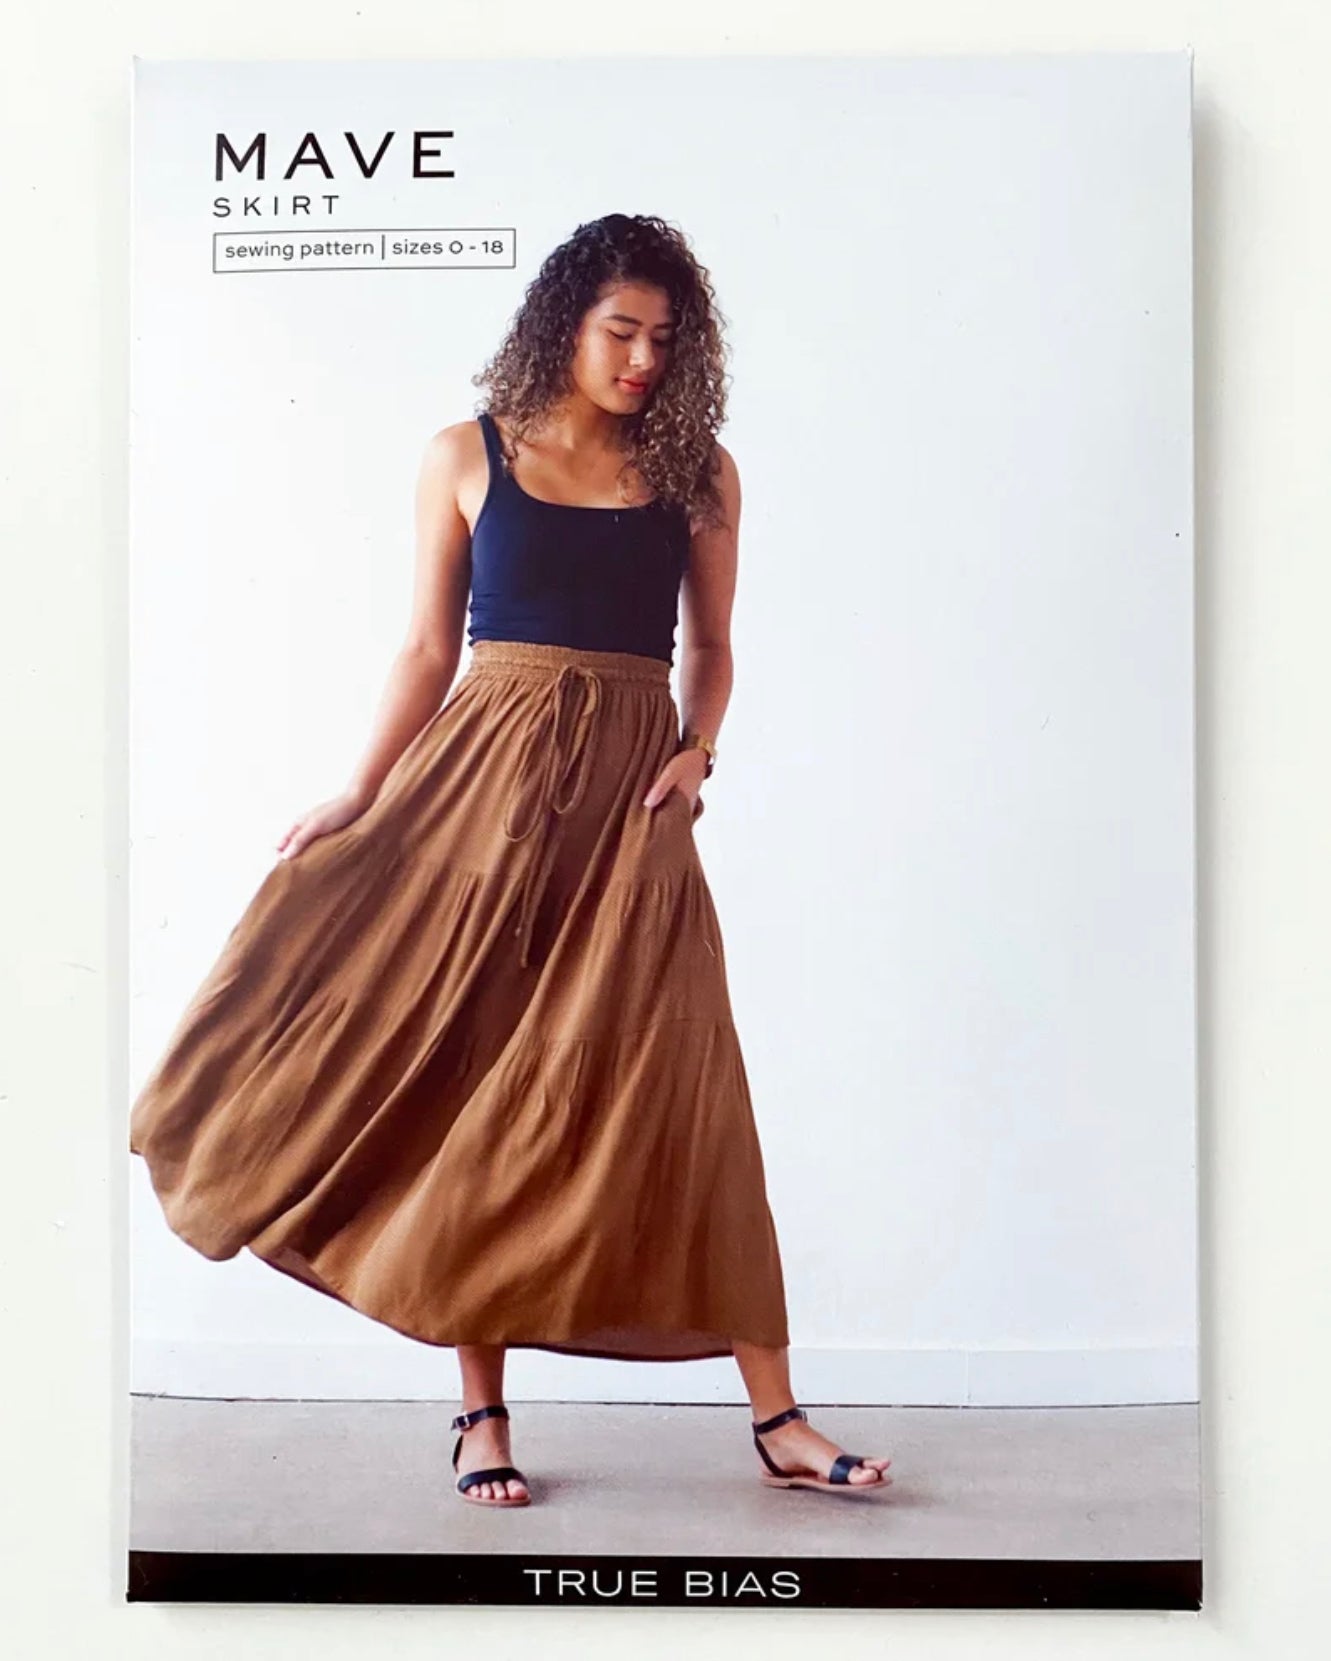 True / Bias  -  MAVE Skirt Sewing Pattern 0-18